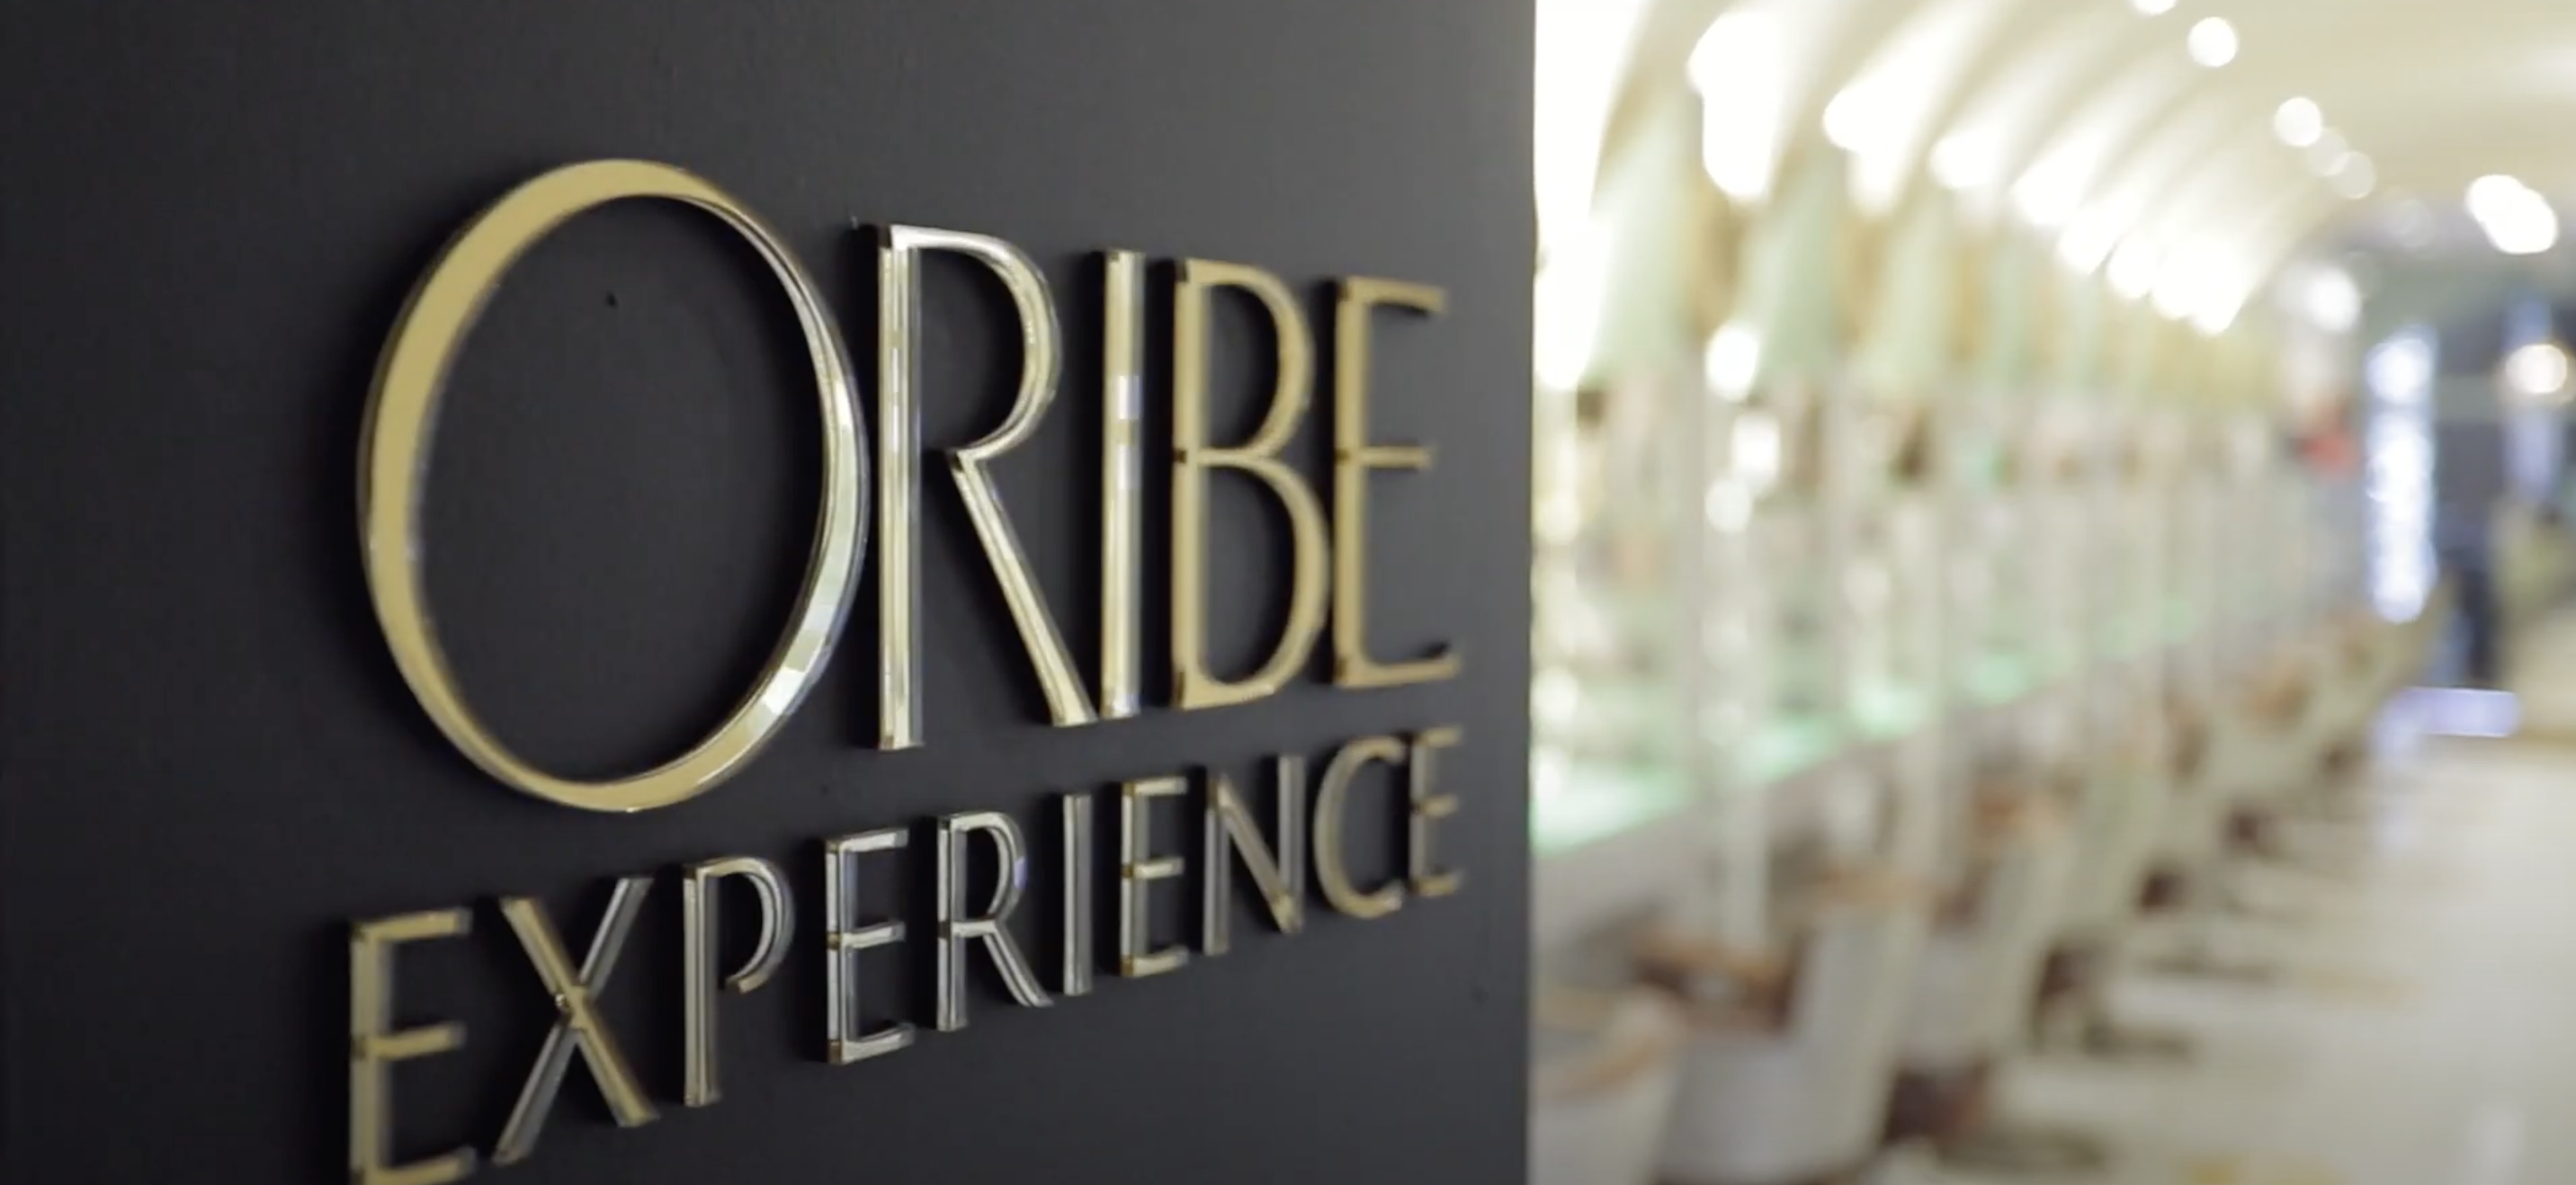 oribe-experience